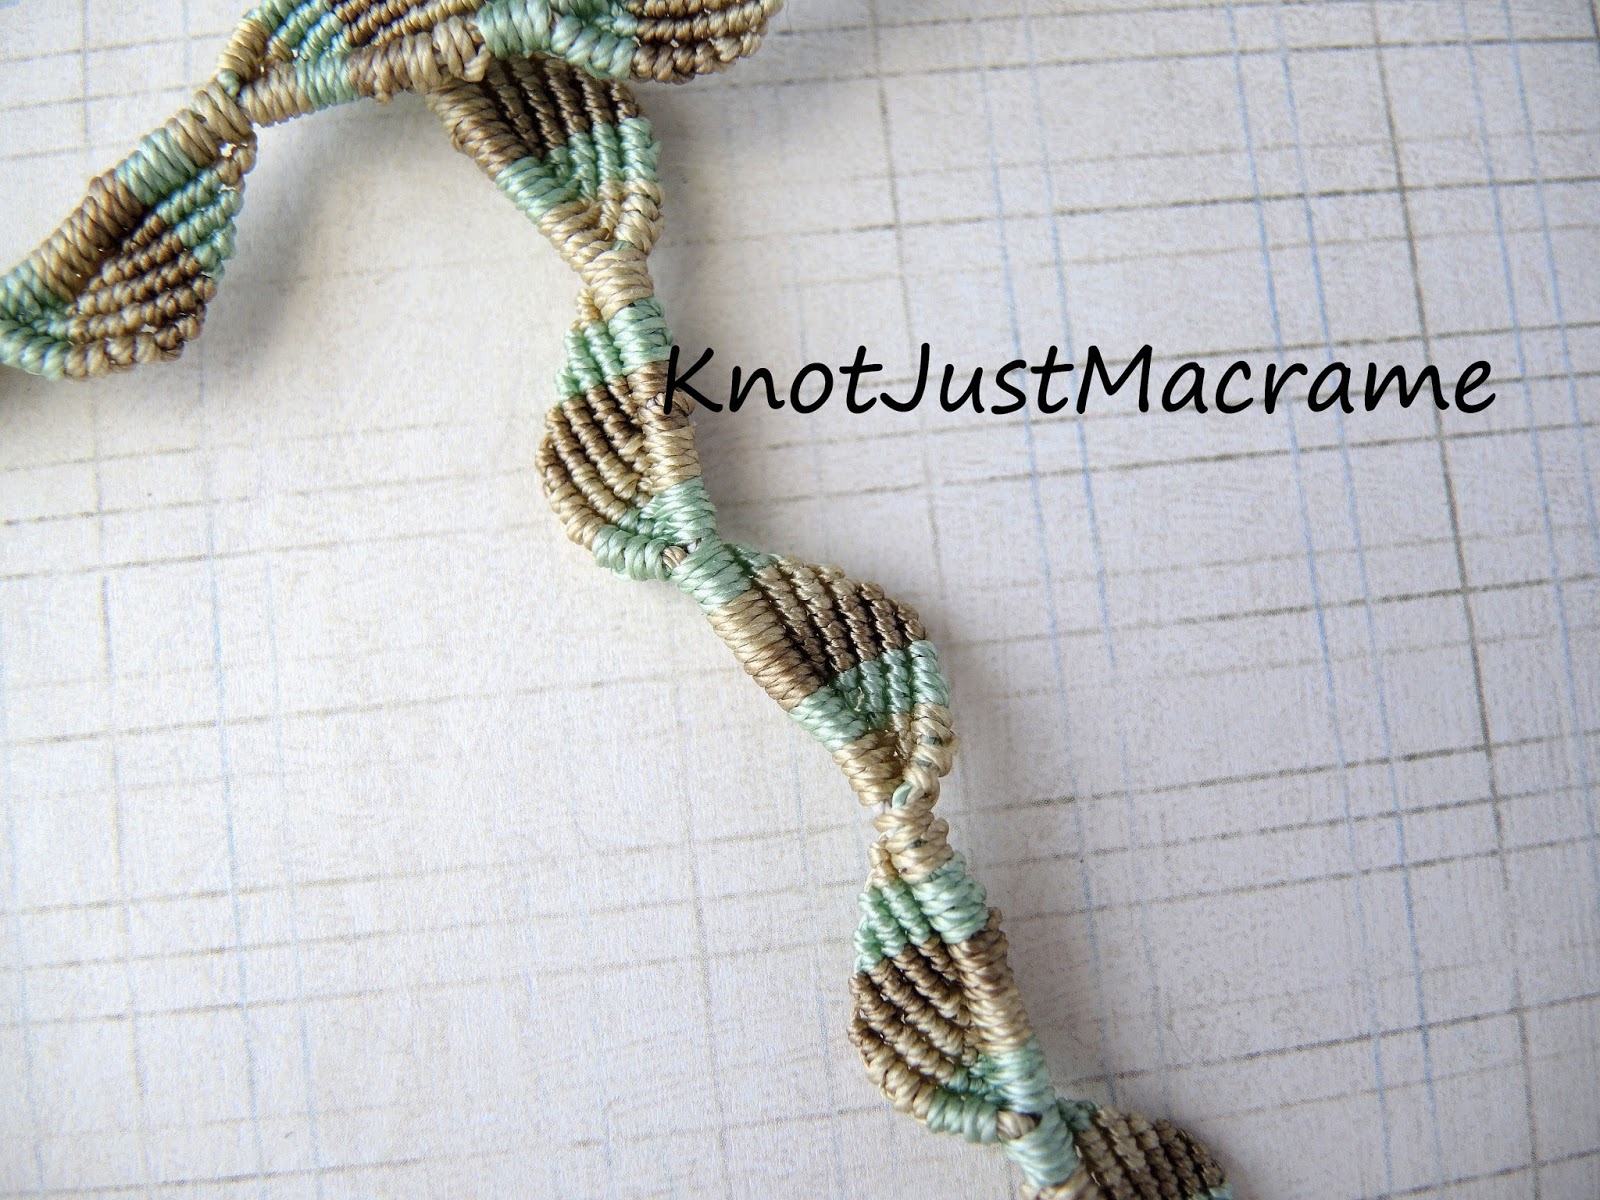 Micro macrame knot work in mint and khaki.